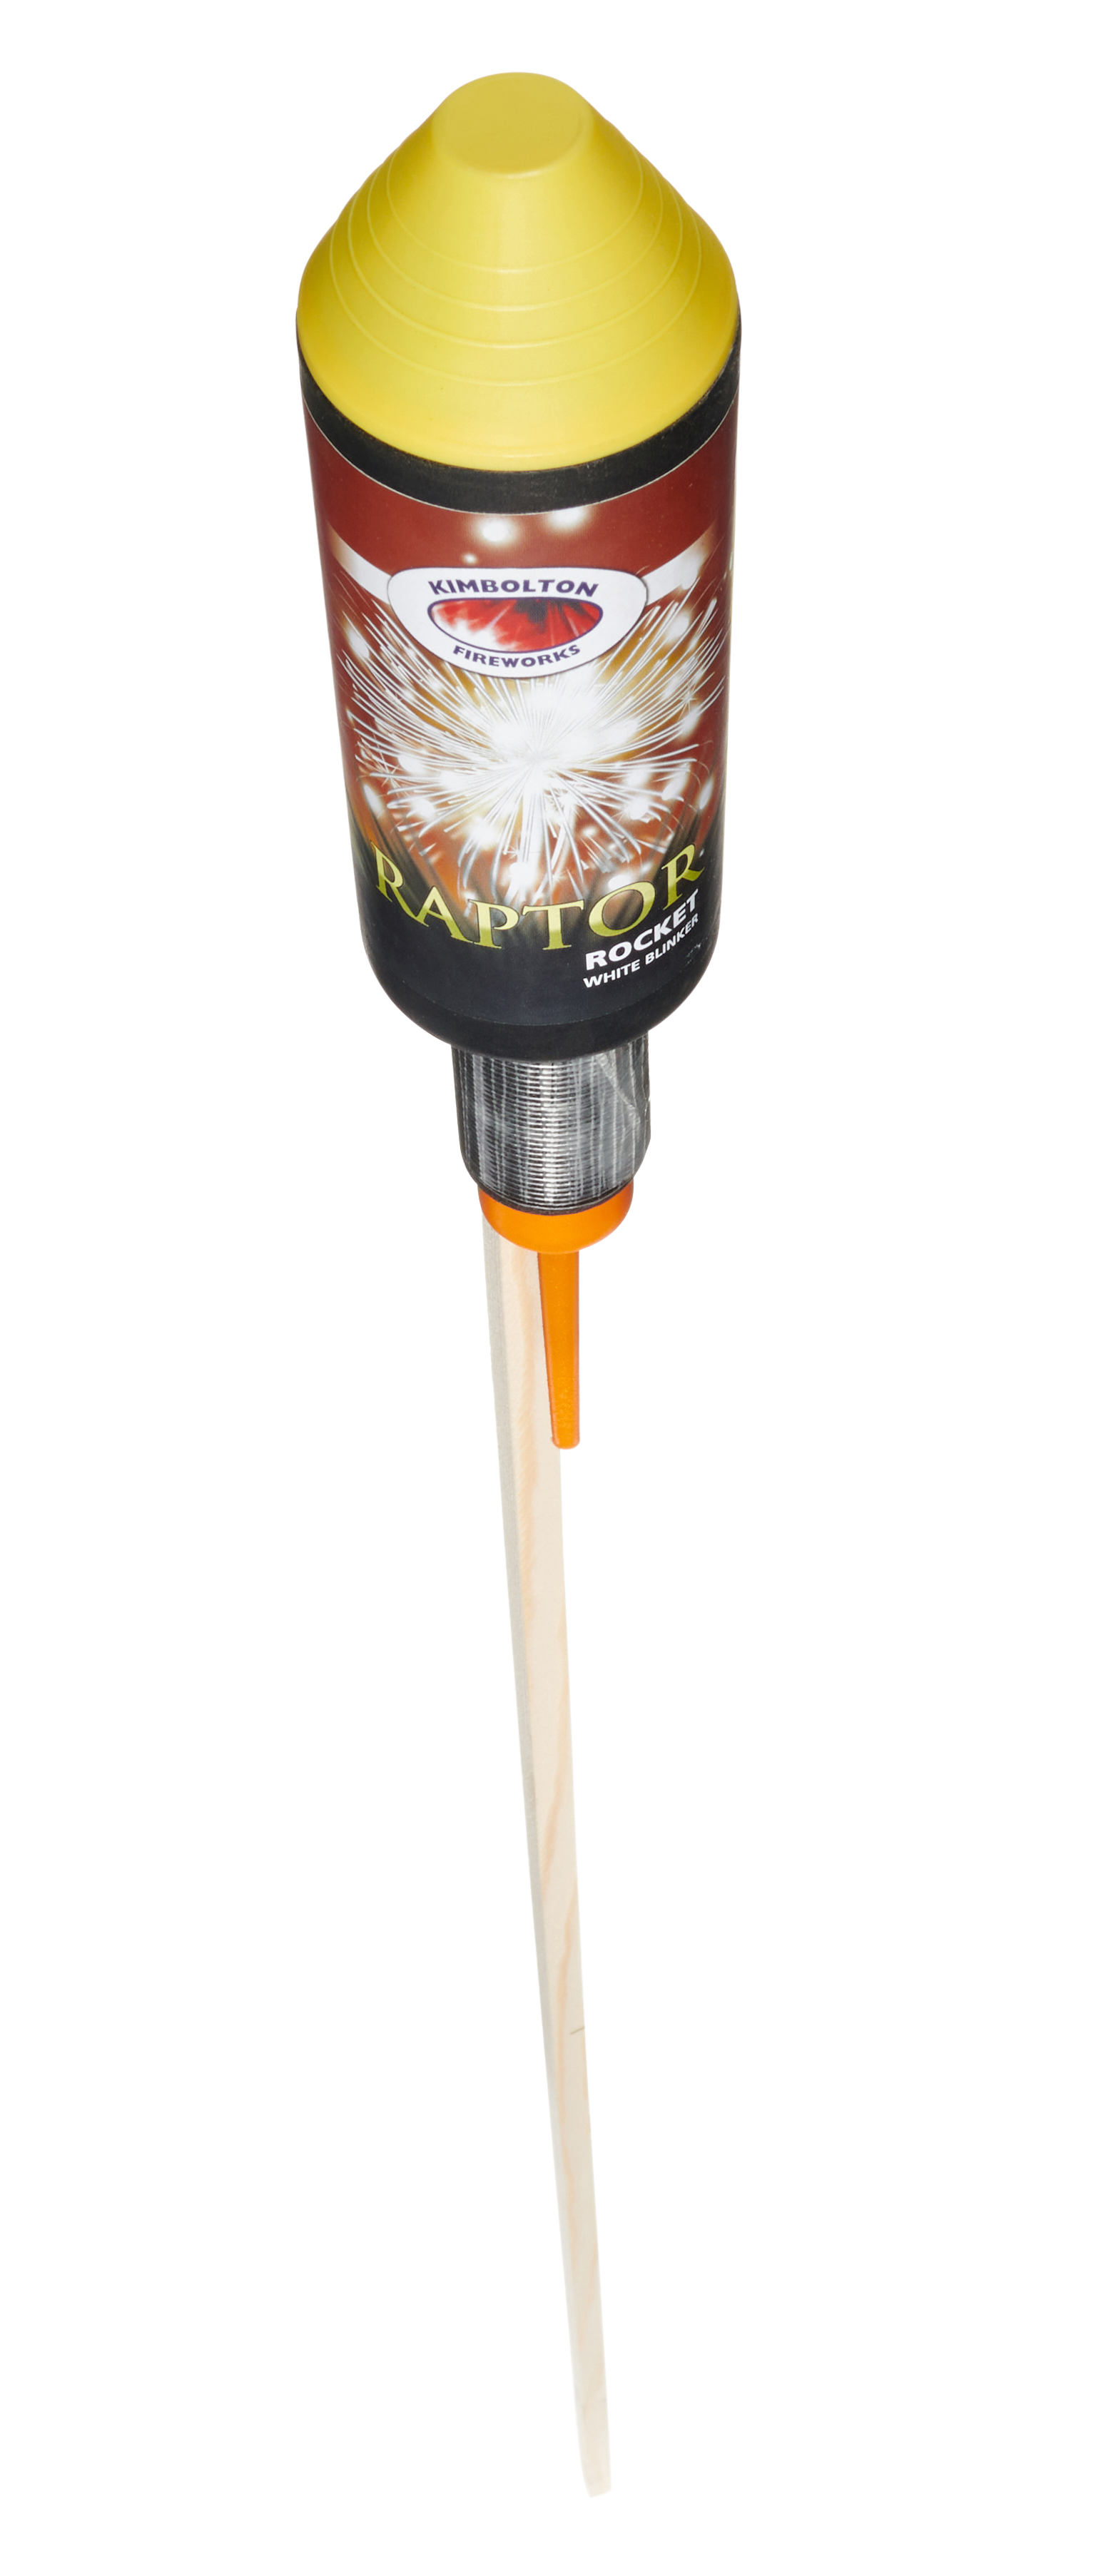 Raptor Display Quality Rocket by Kimbolton Fireworks White Blinker